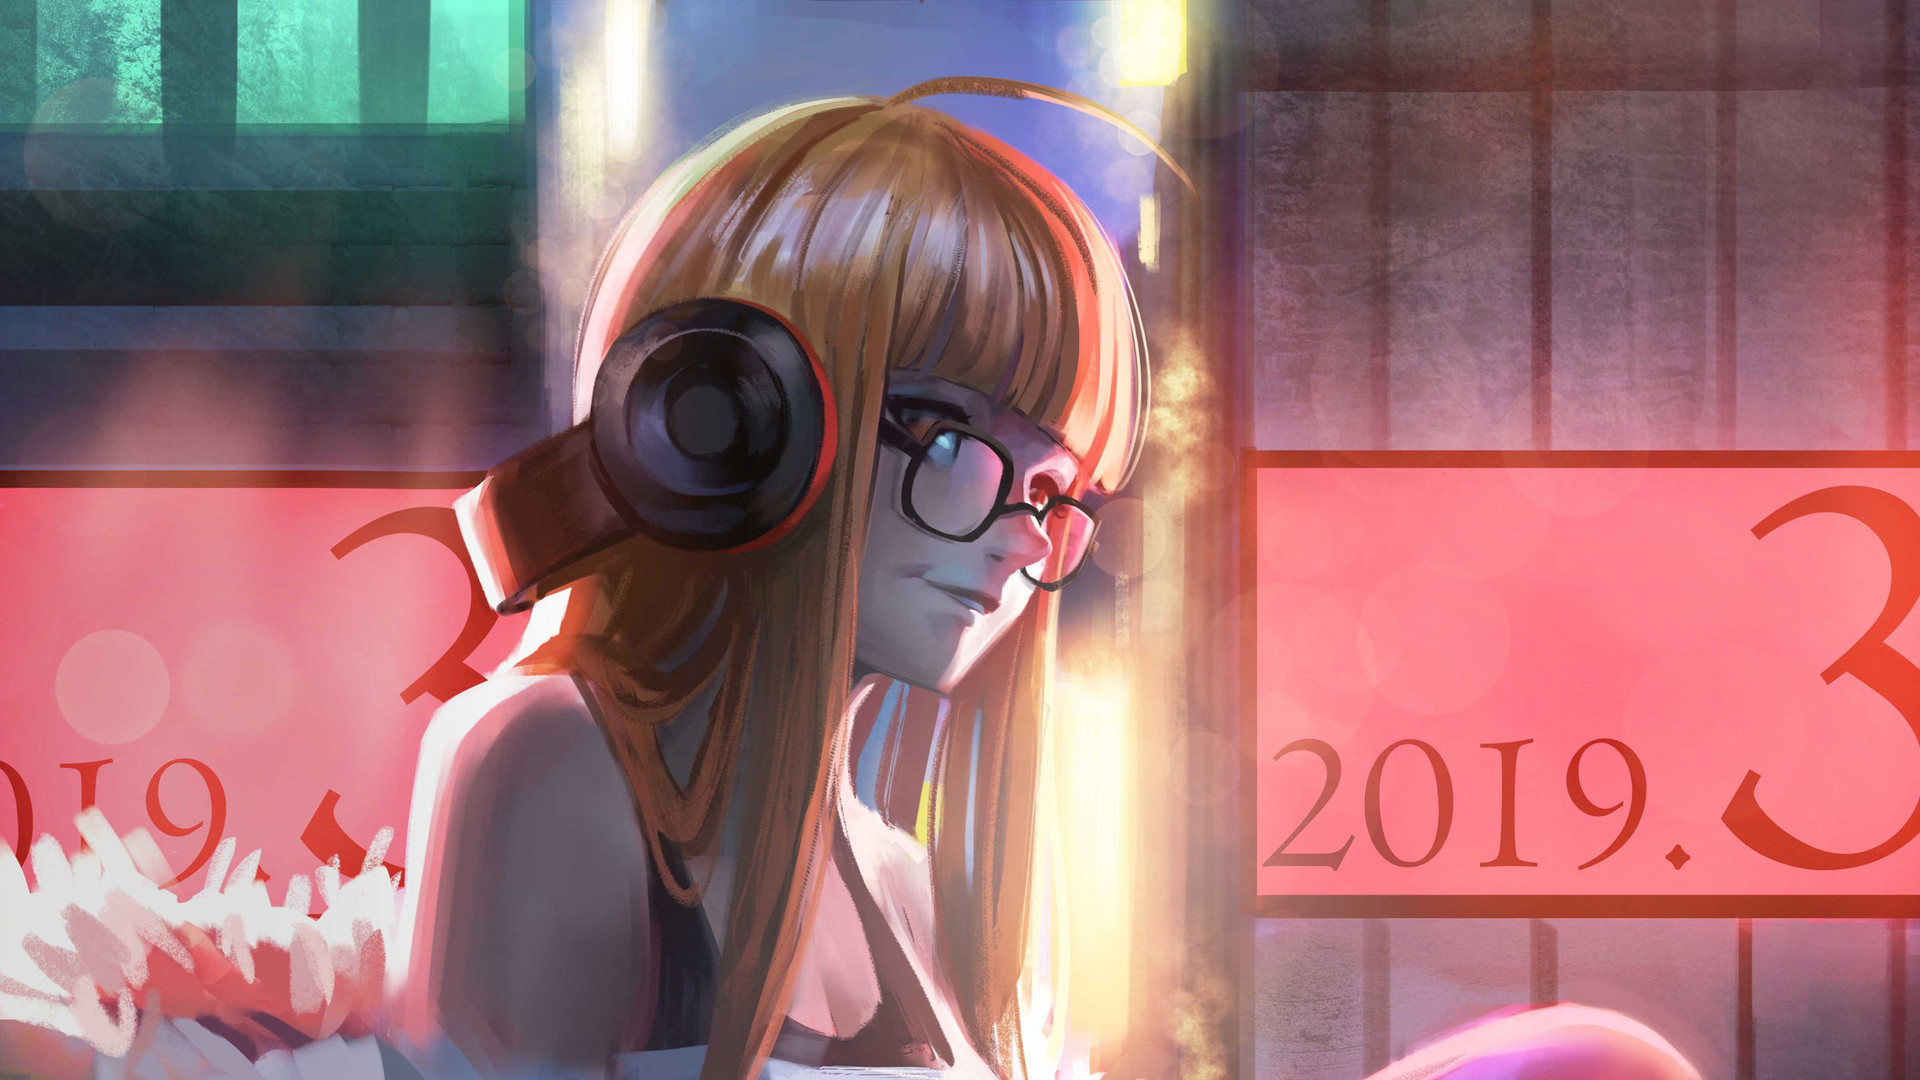 TOKERX MUSIC - Anime Girl With Headphones Art